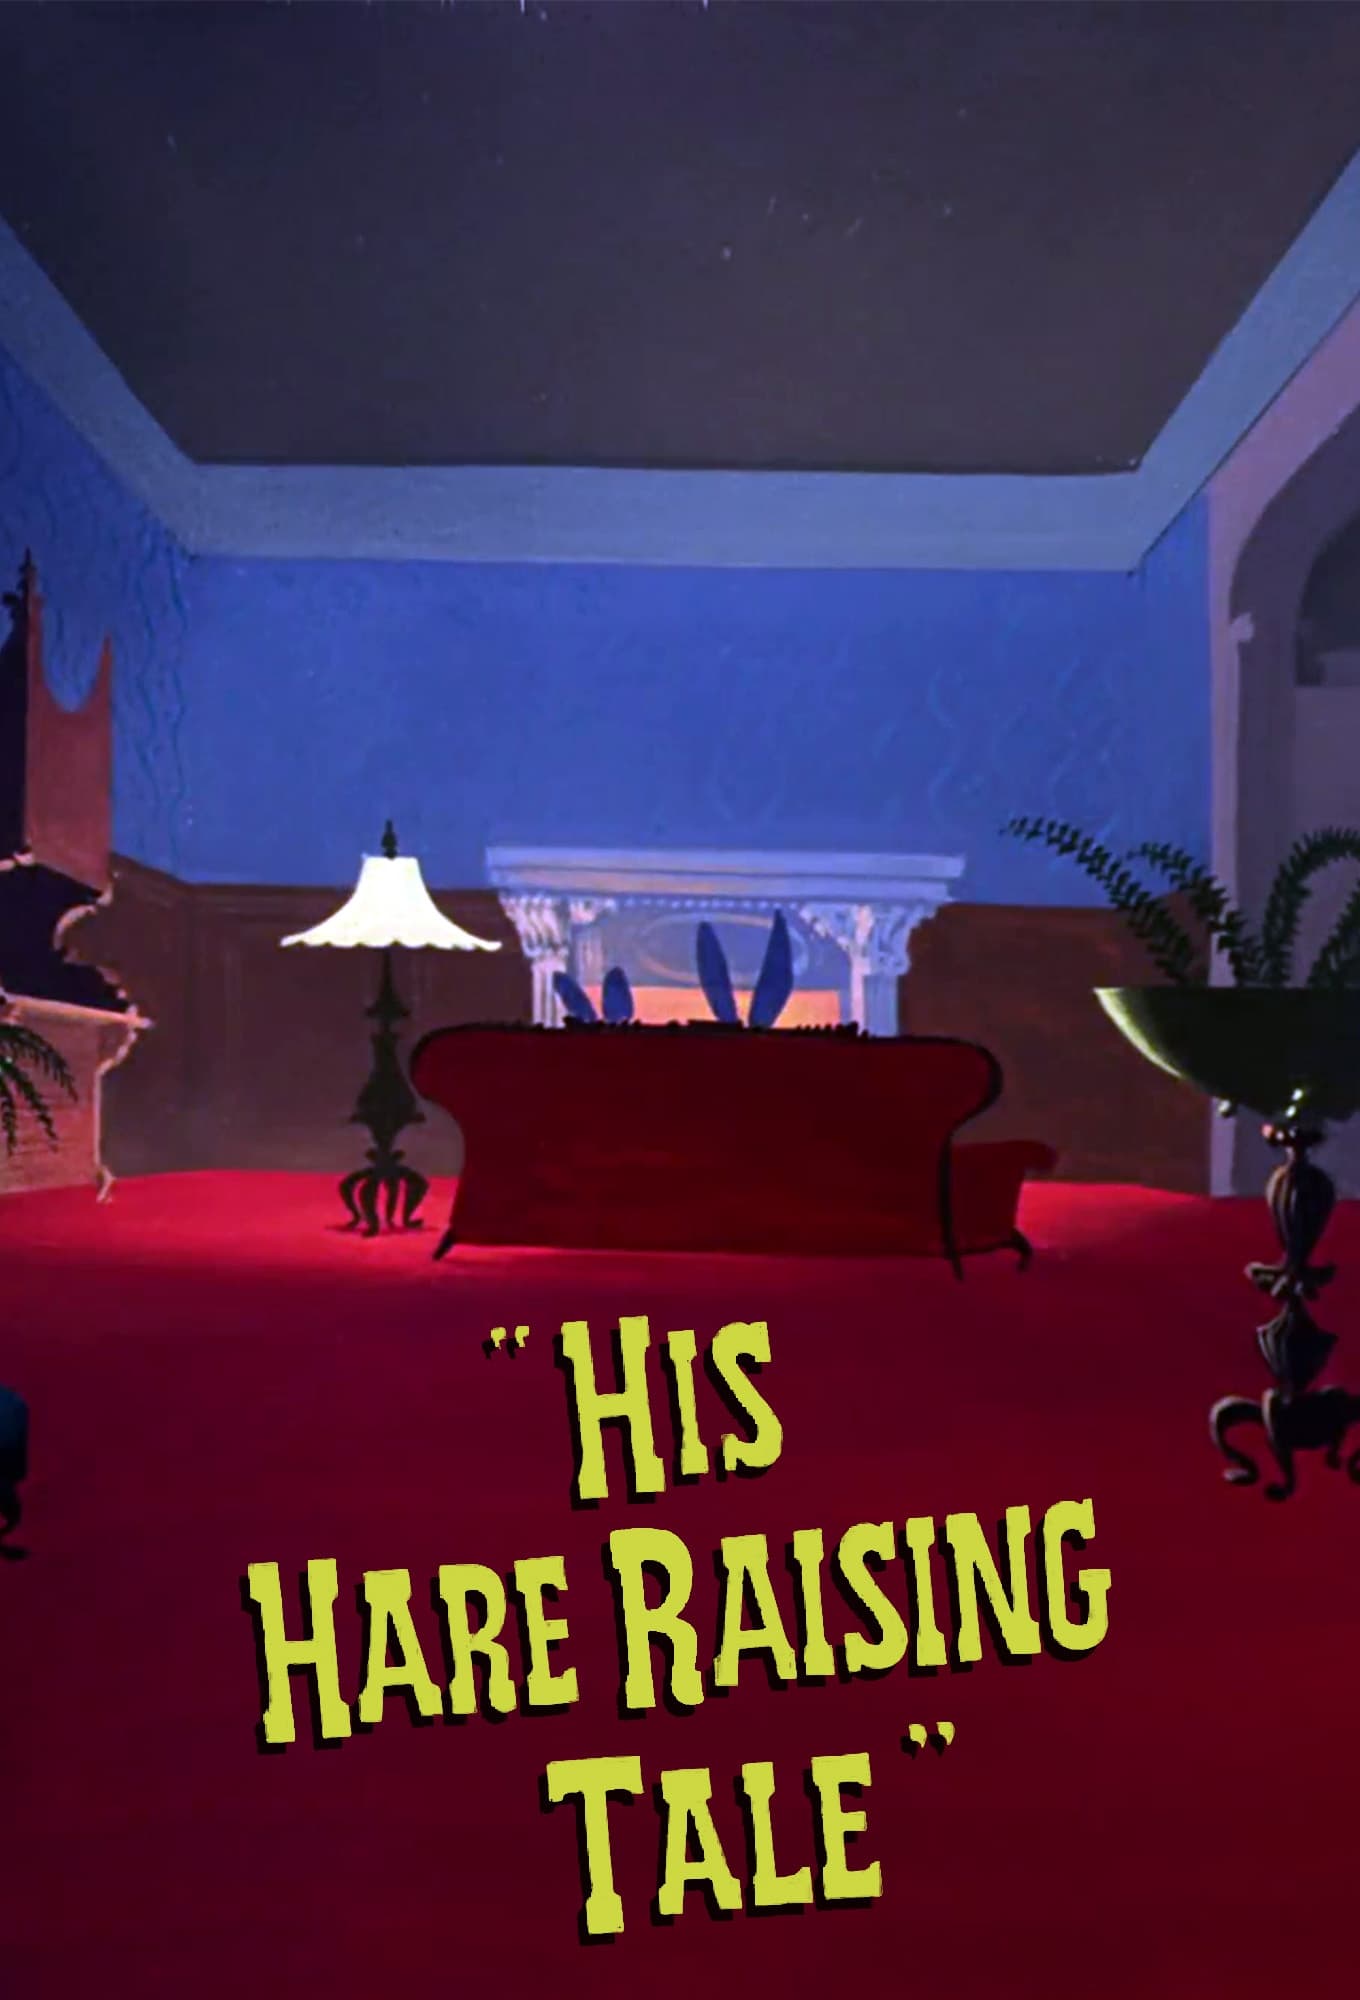 His Hare Raising Tale